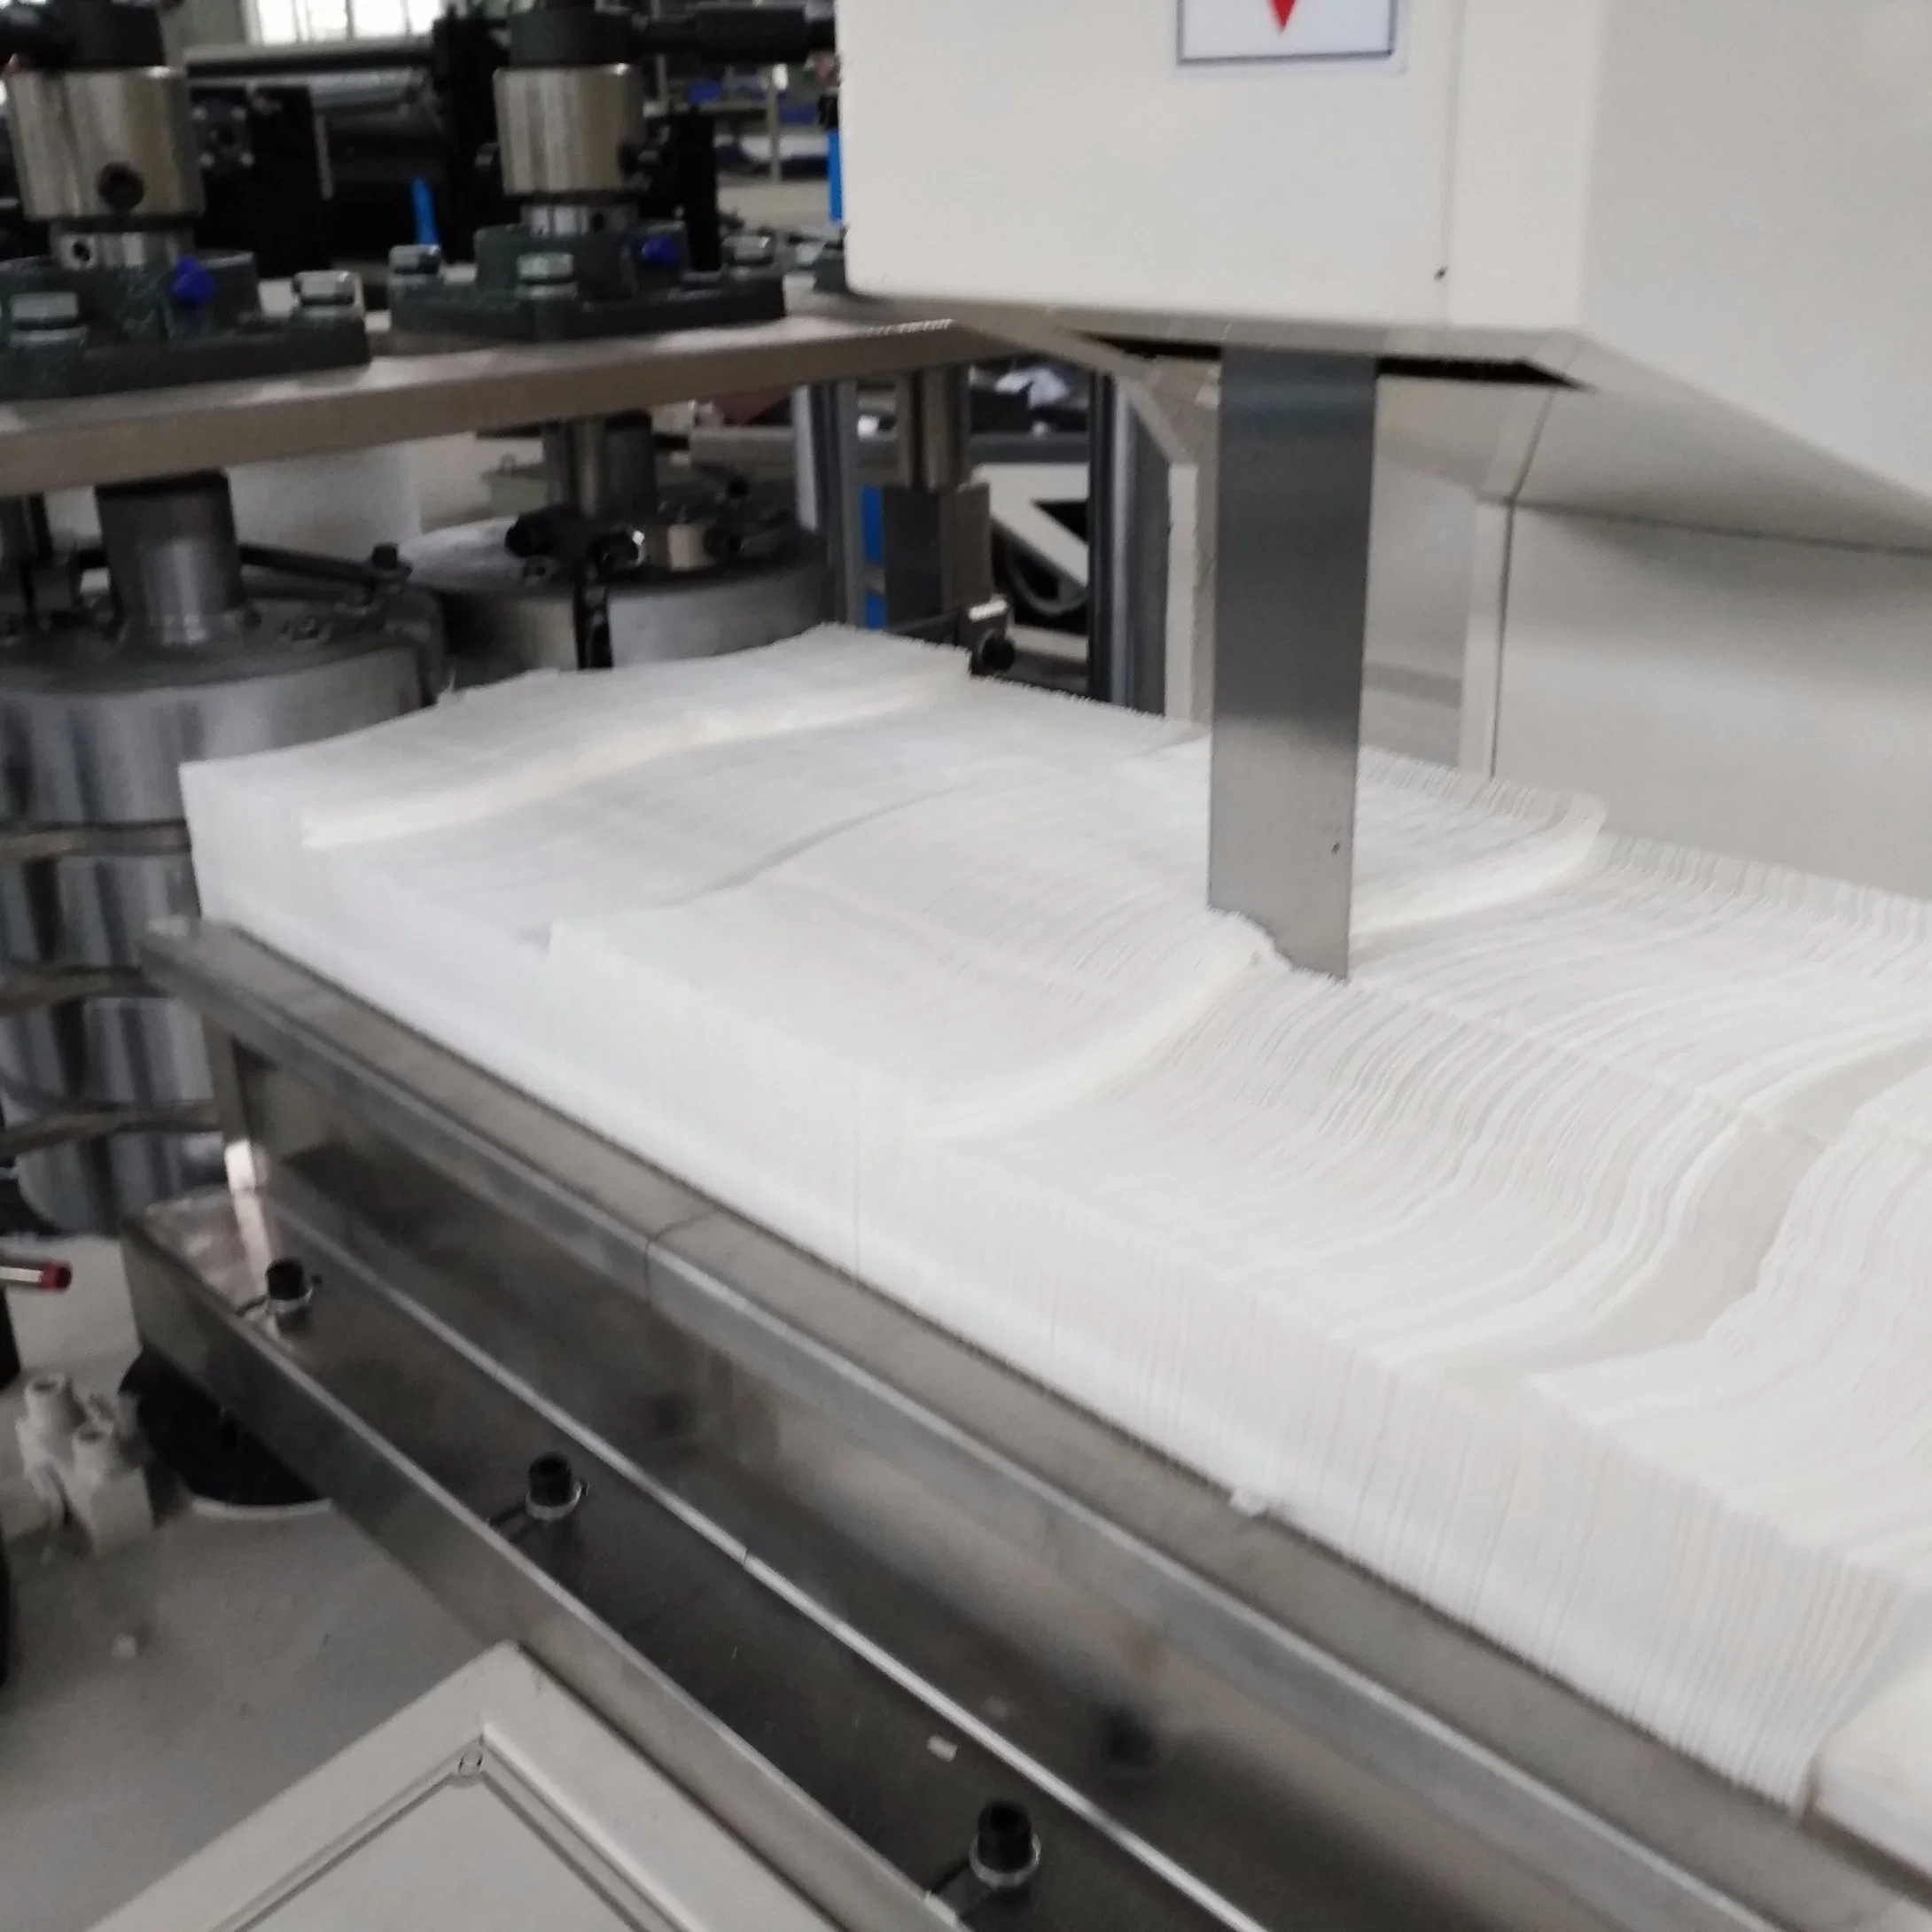 Automatic Tissue Paper Serviette Napkin Folding Machine with Color Printing